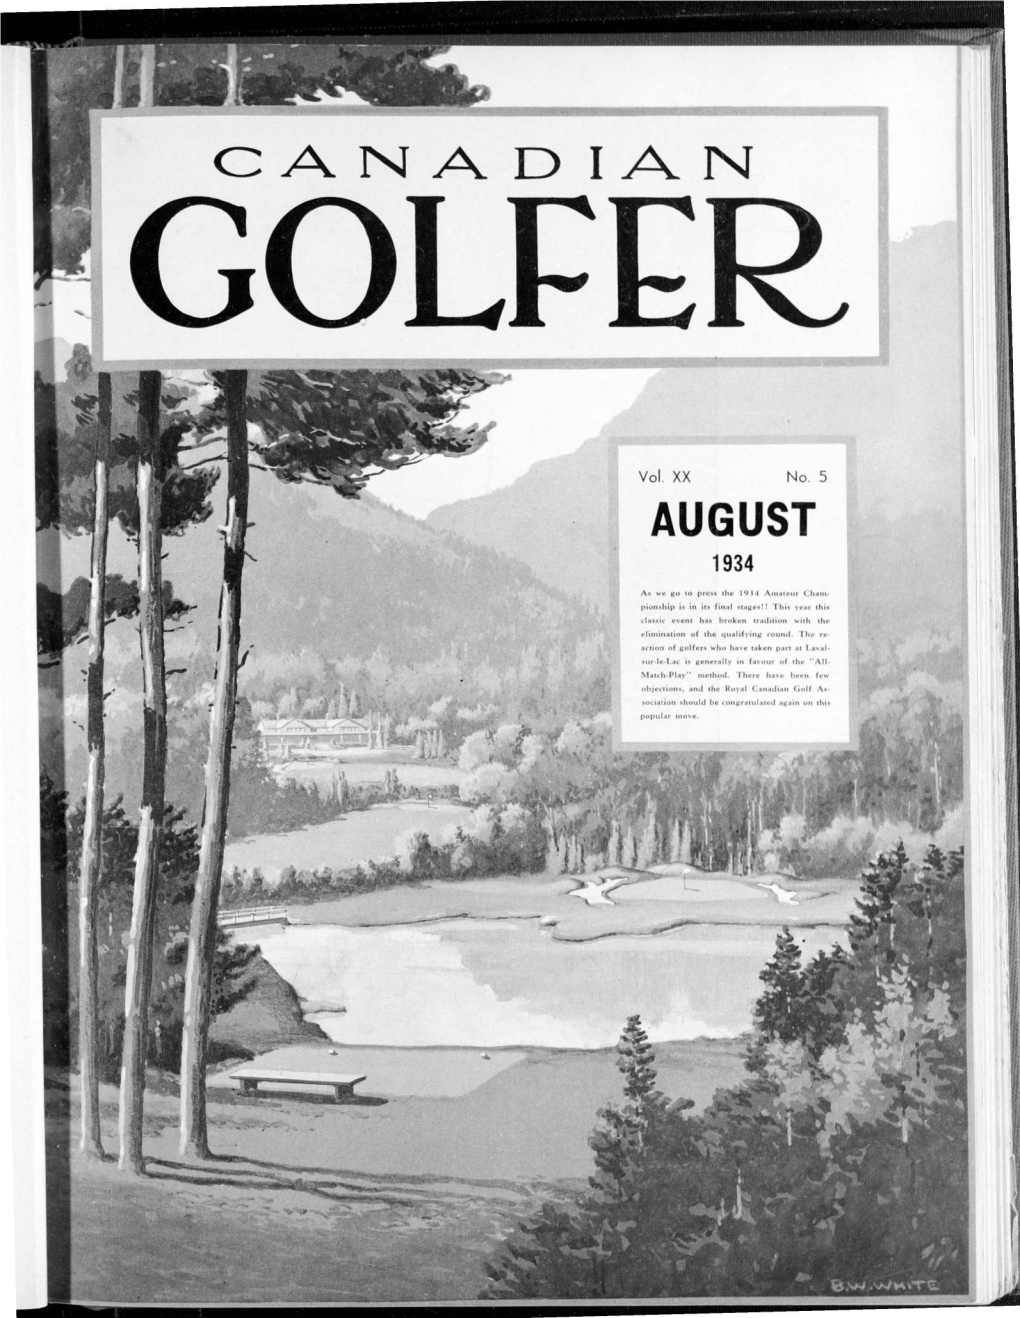 Canadian Golfer, August, 1934